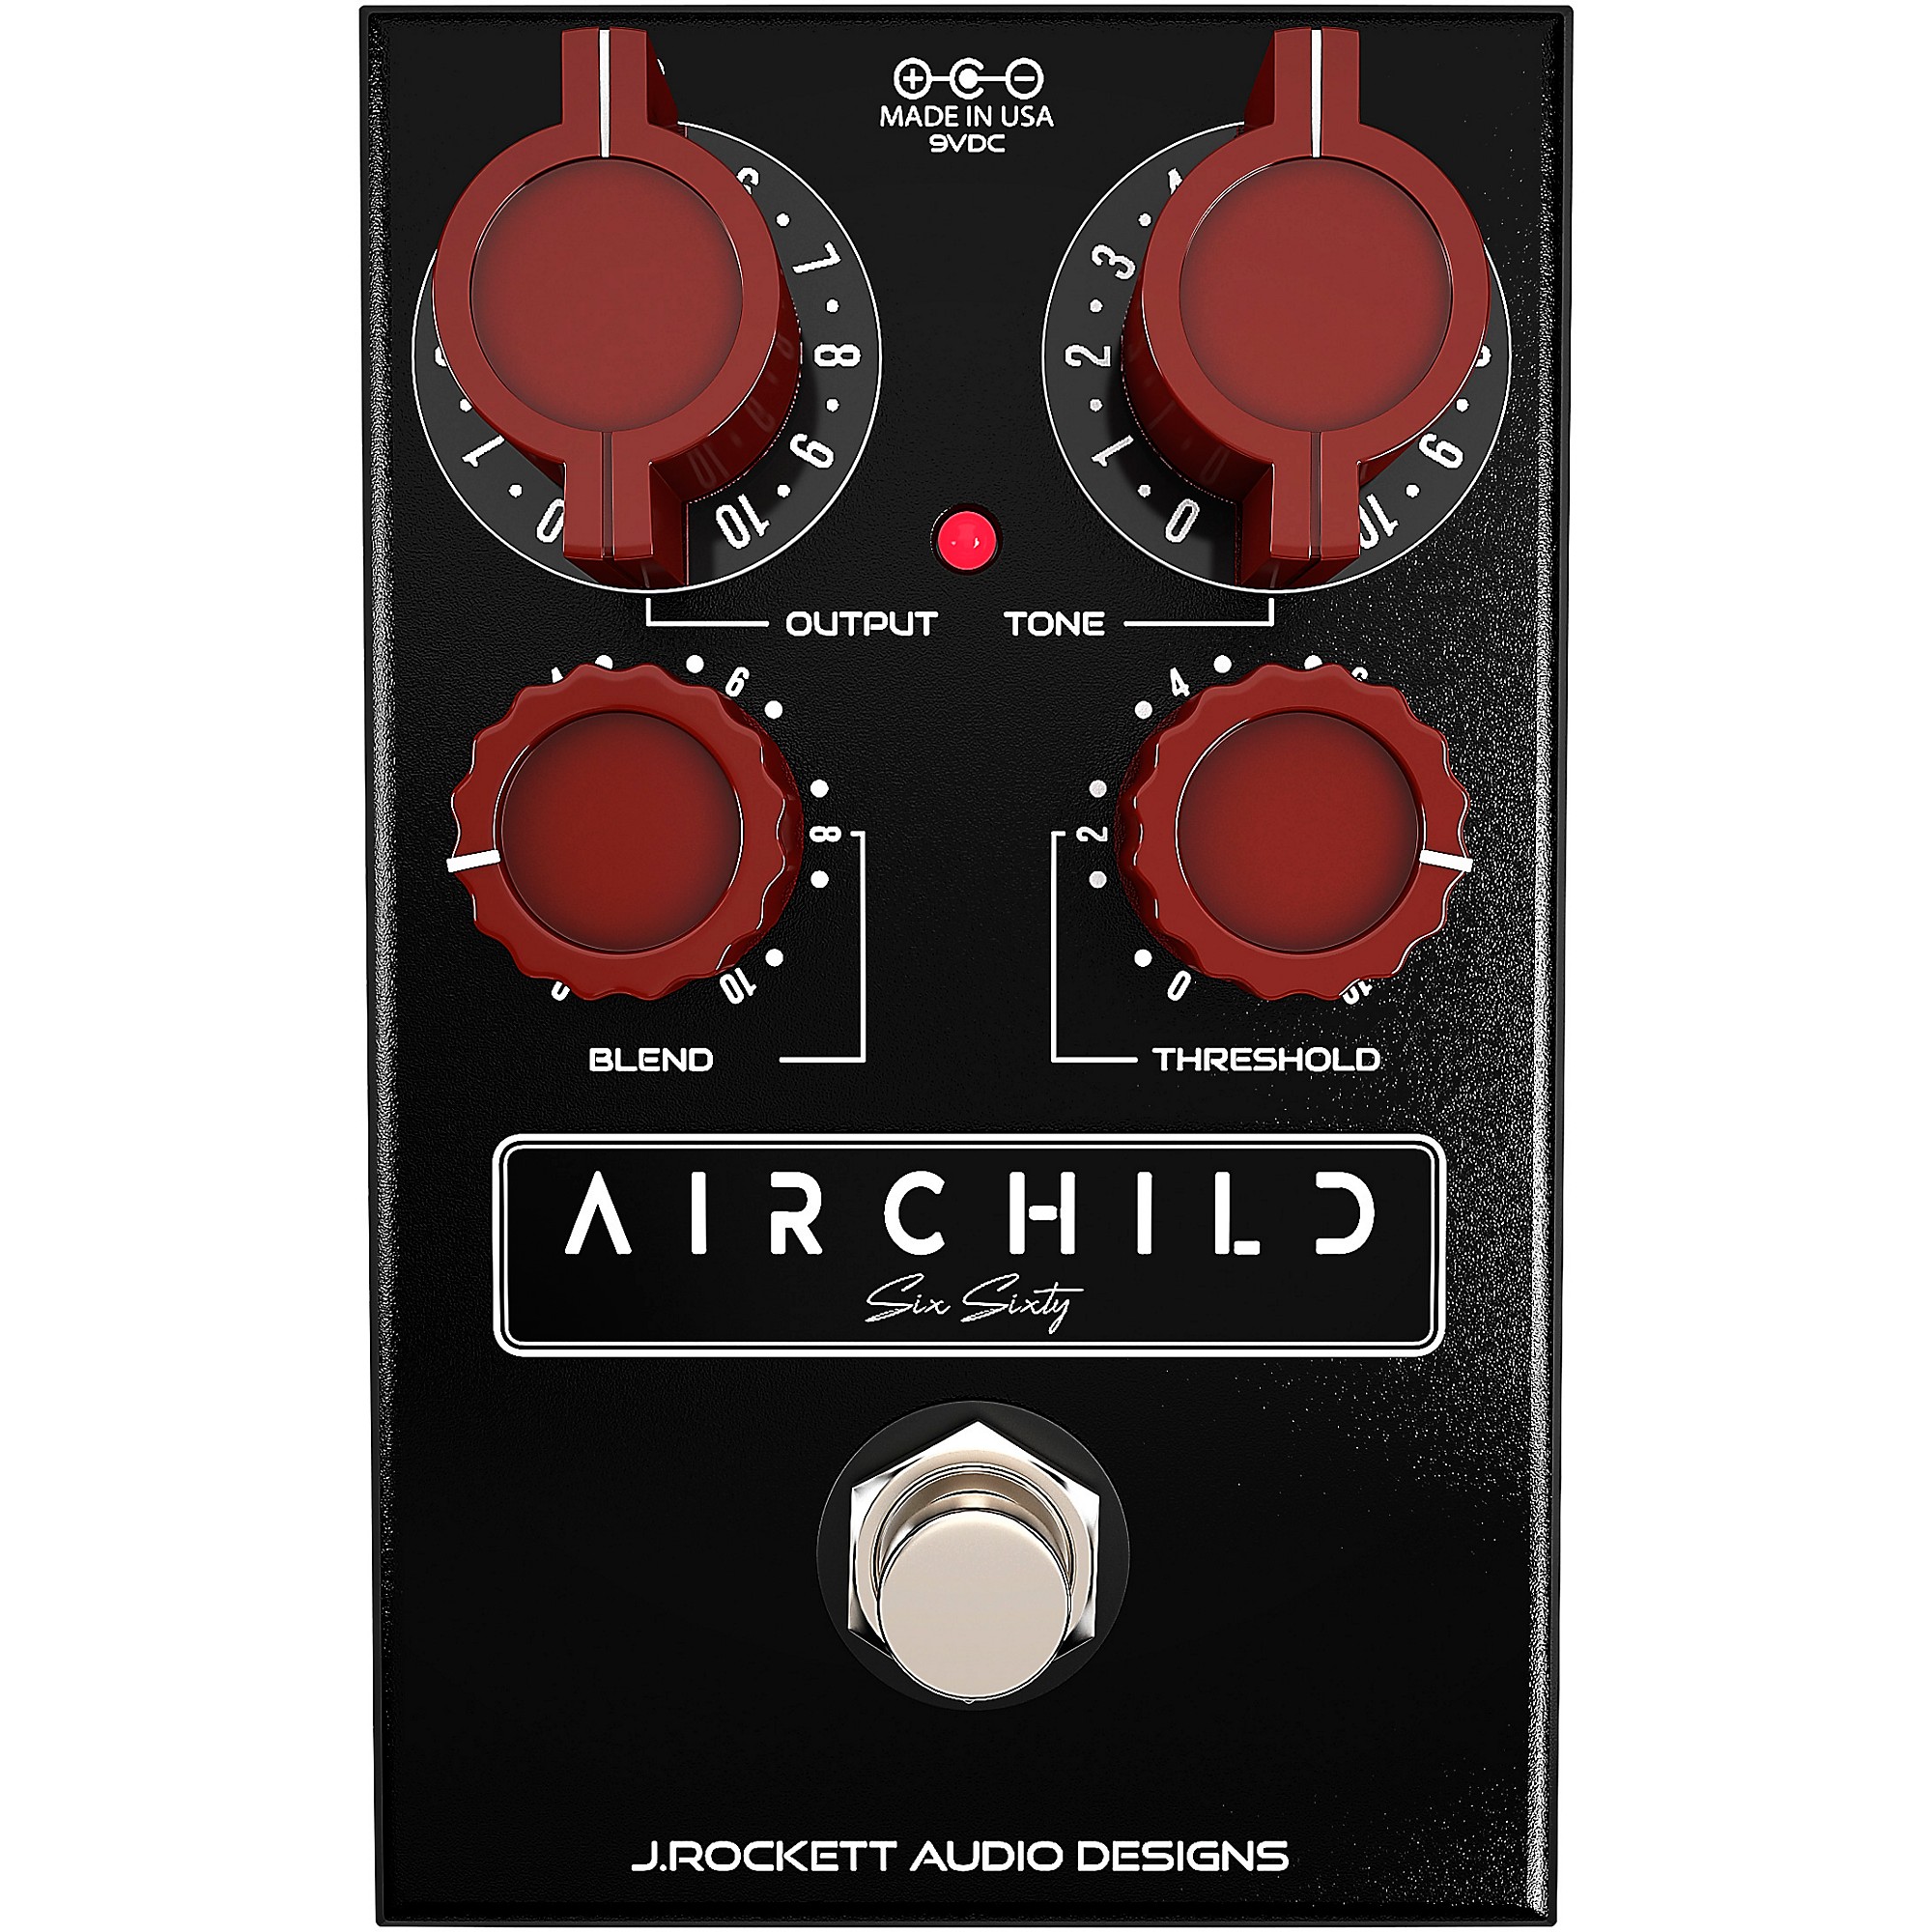 J.Rockett Audio Designs Airchild 660 Compressor Effects Pedal 